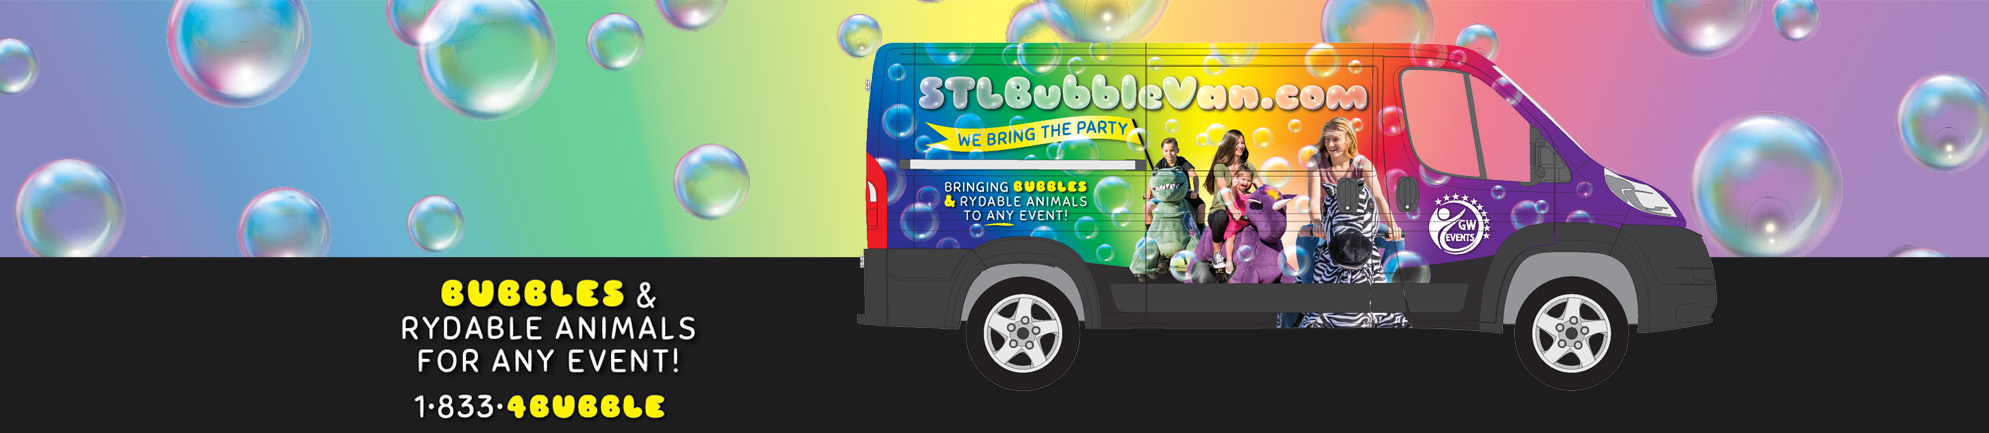 St. Louis Bubble Van and Rydables